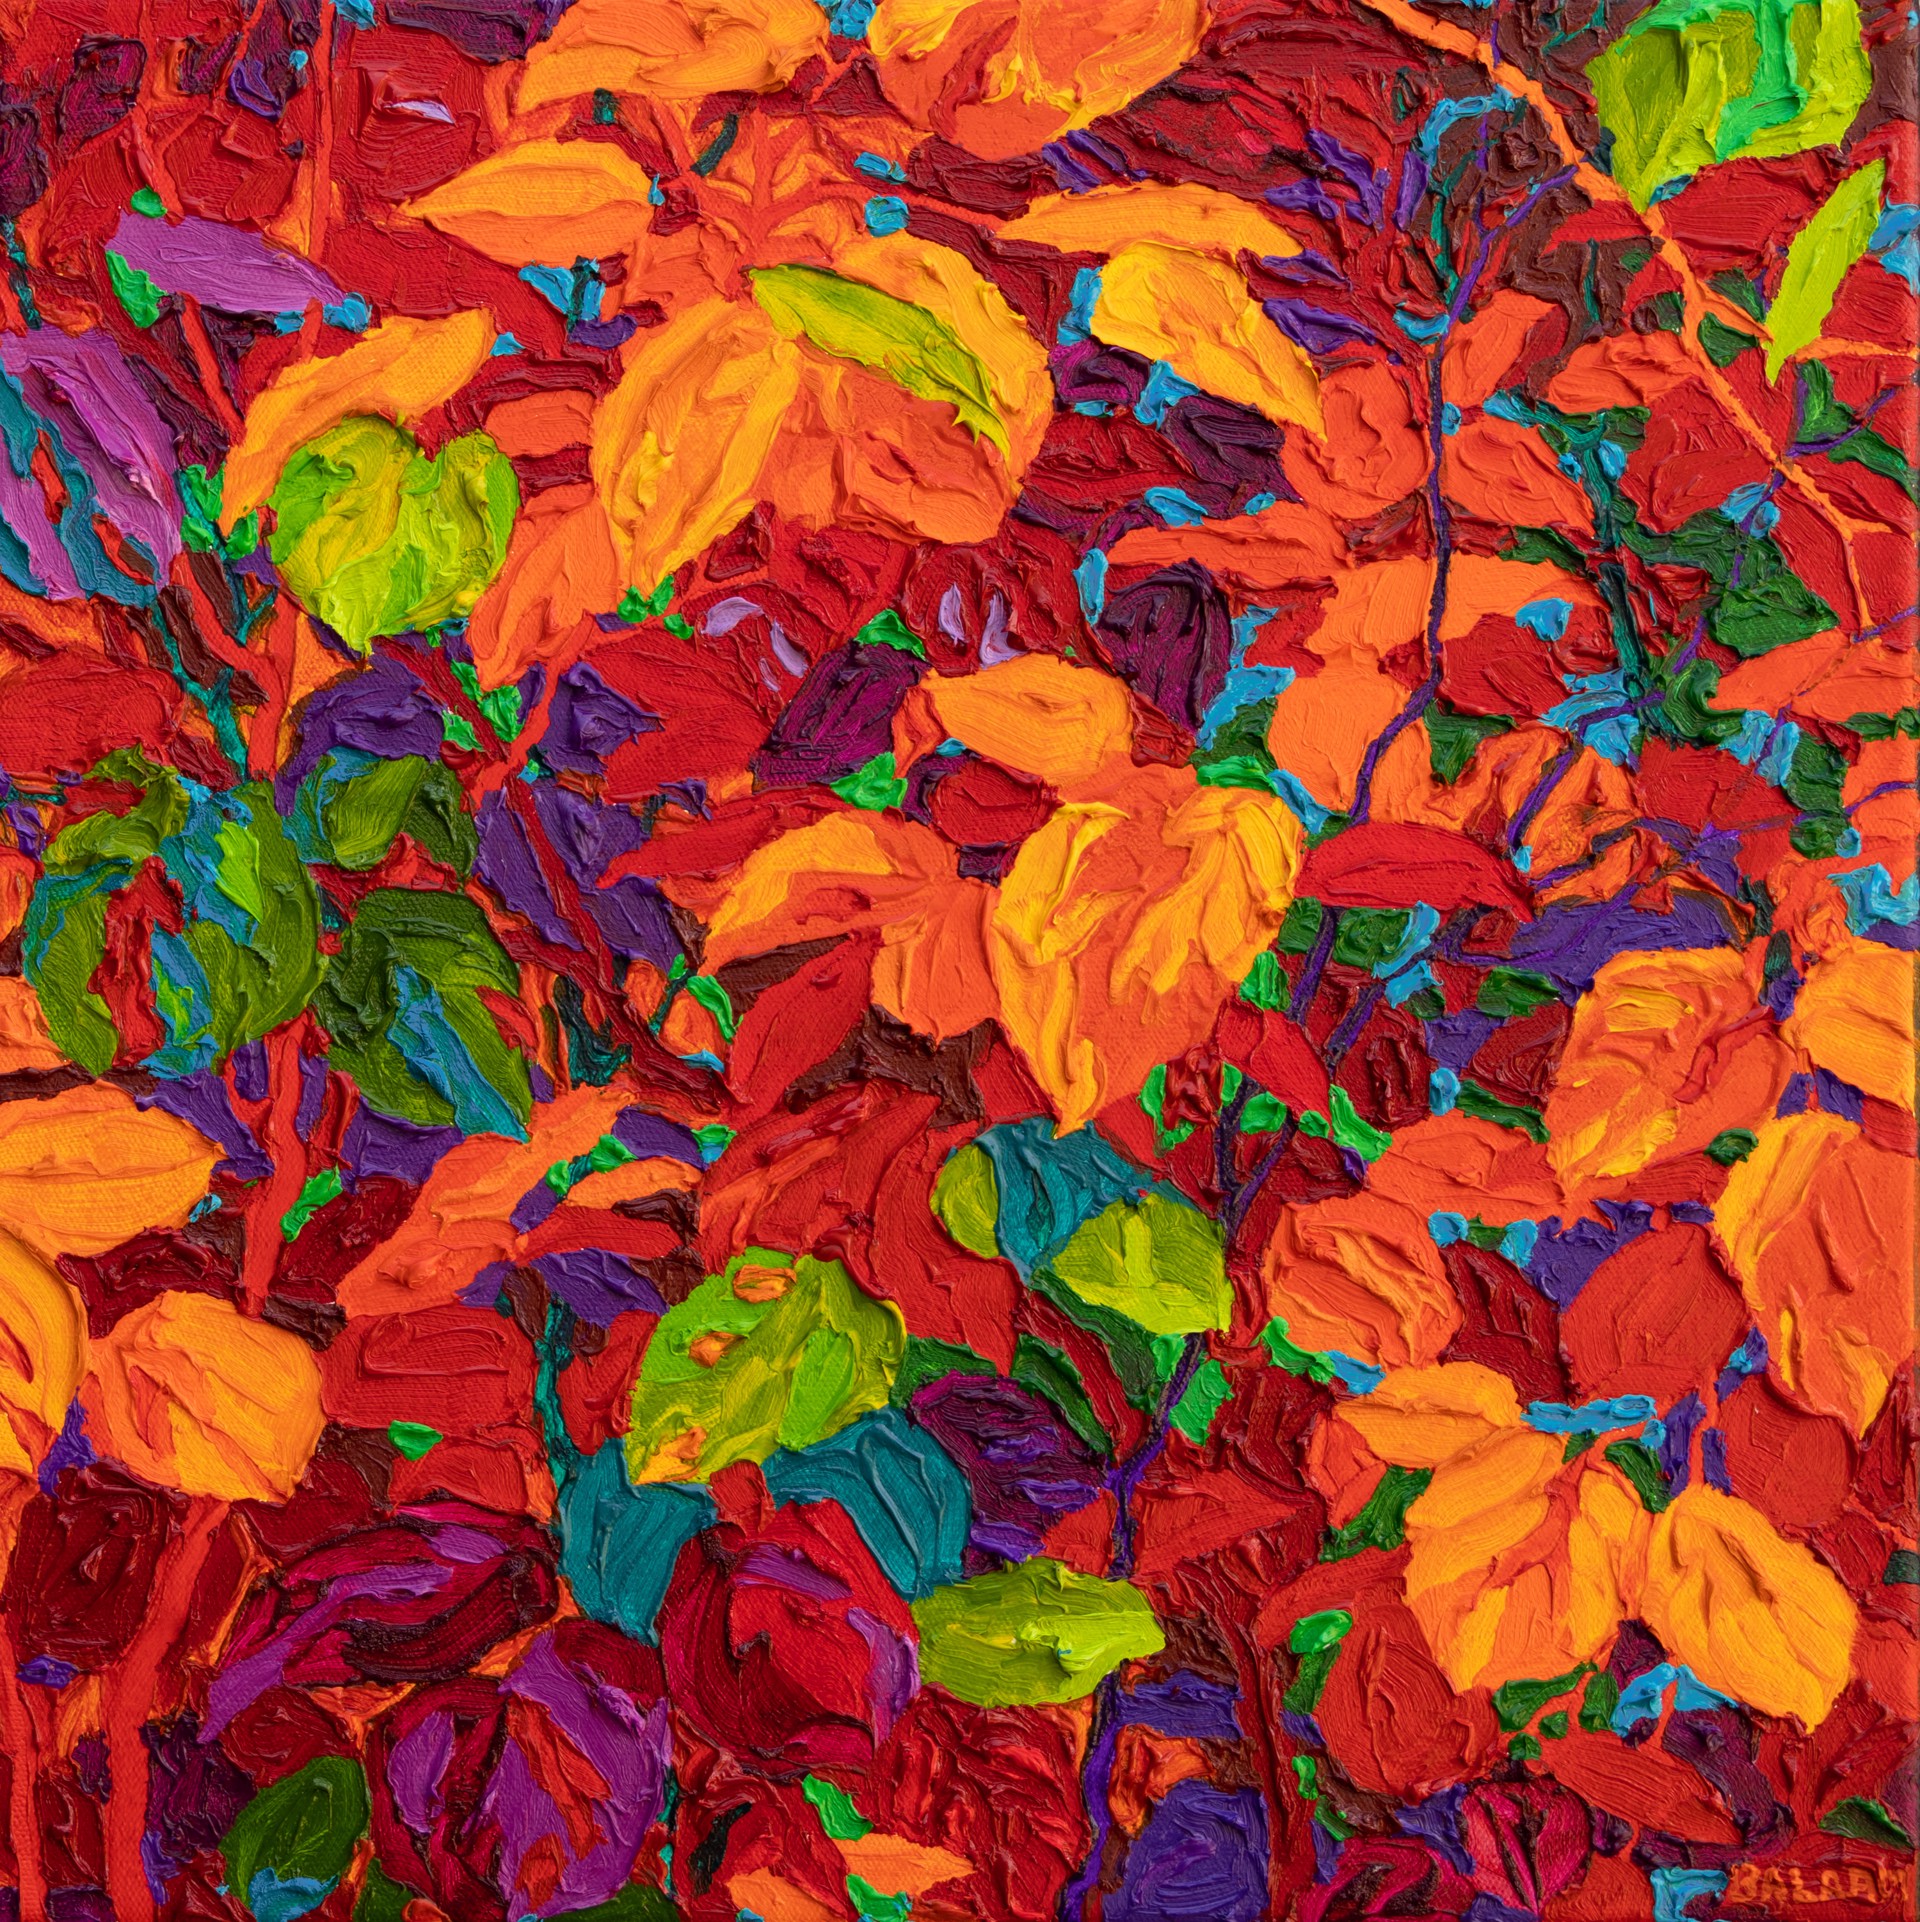 Every Leaf Series - Autumn Leaf Tangle by Frank Balaam